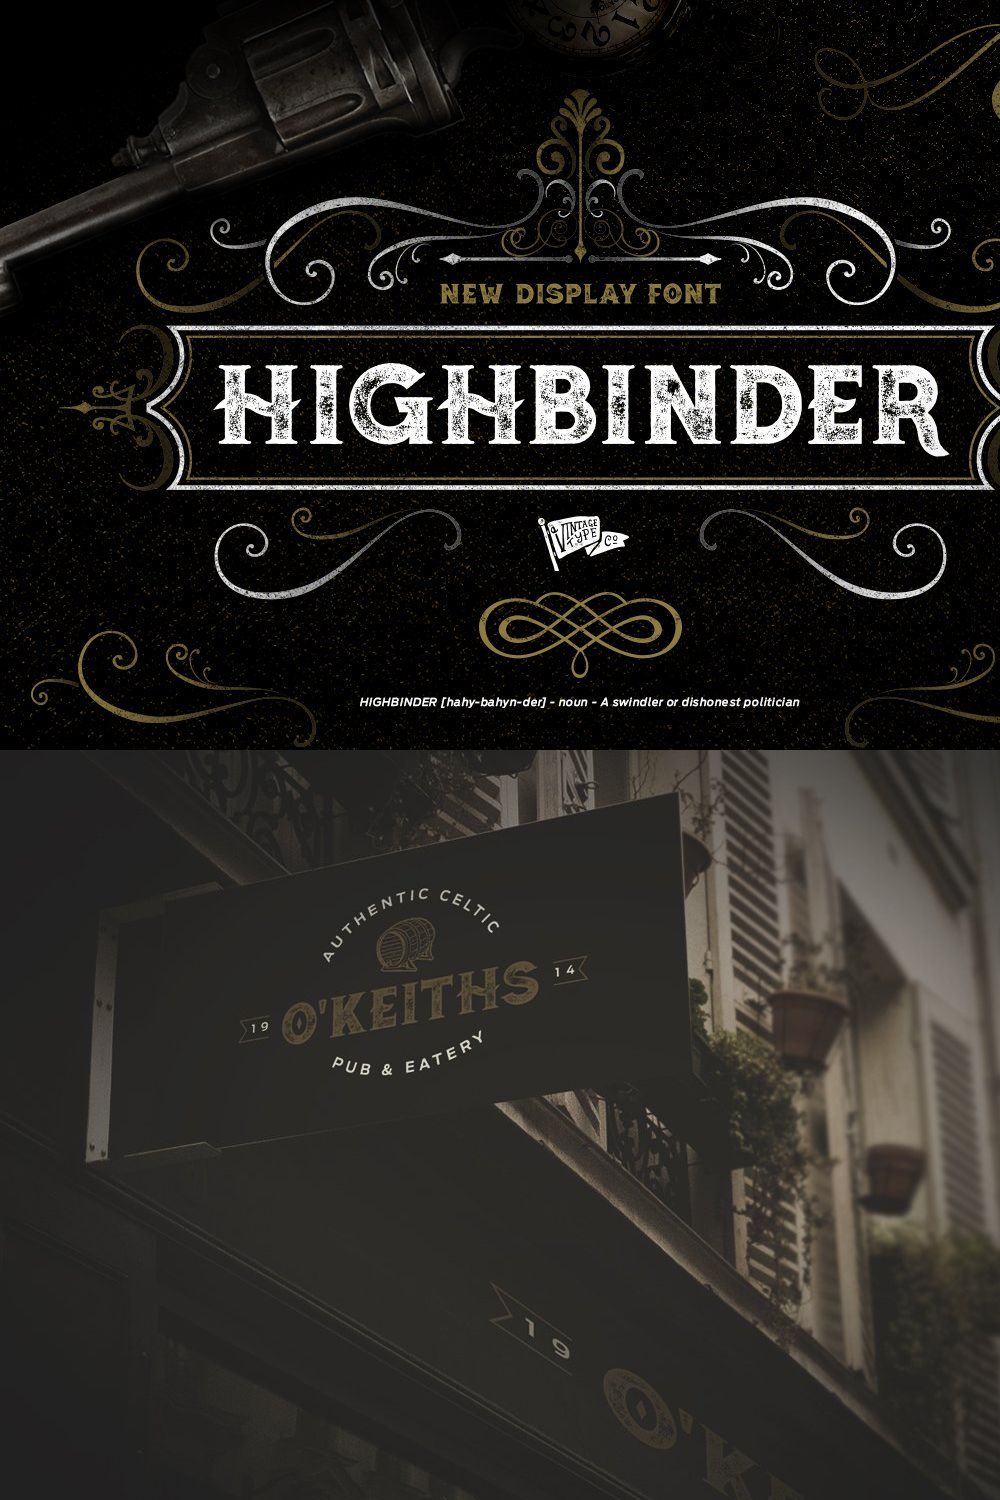 Highbinder Display Font pinterest preview image.